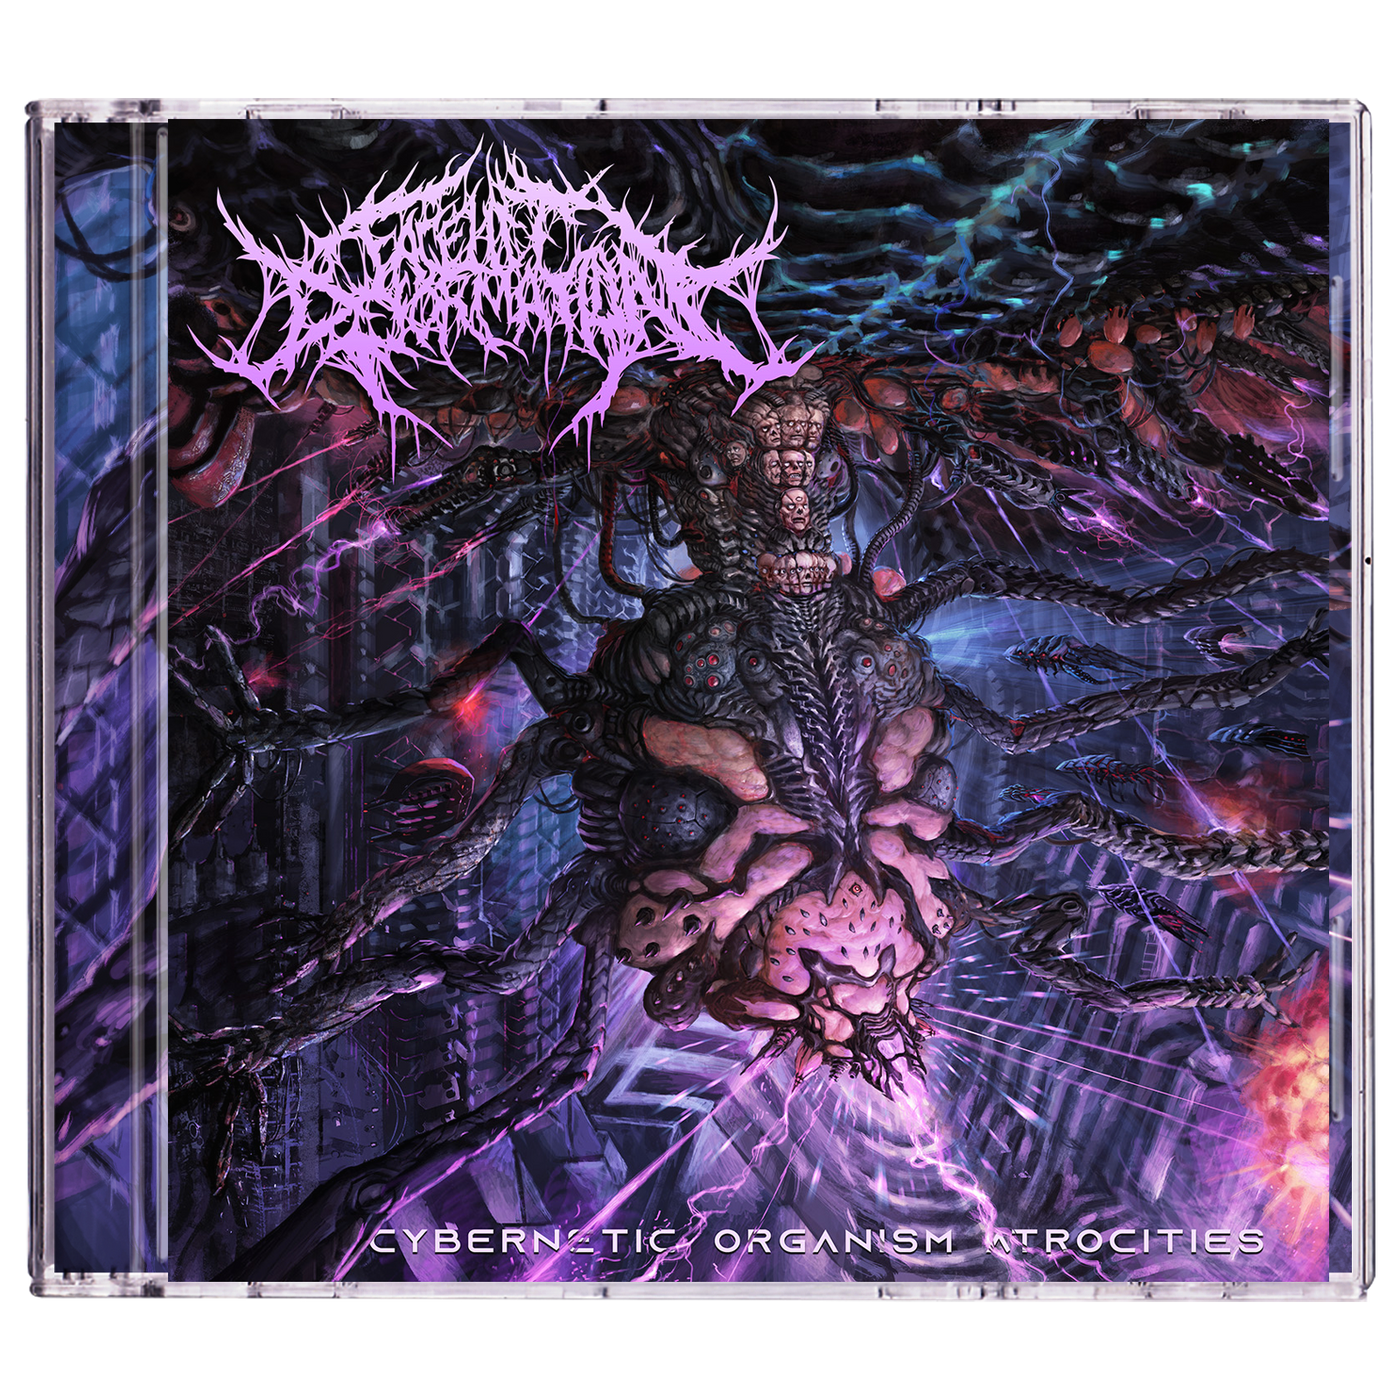 Facelift Deformation 'Cybernetic Organism Atrocities' CD